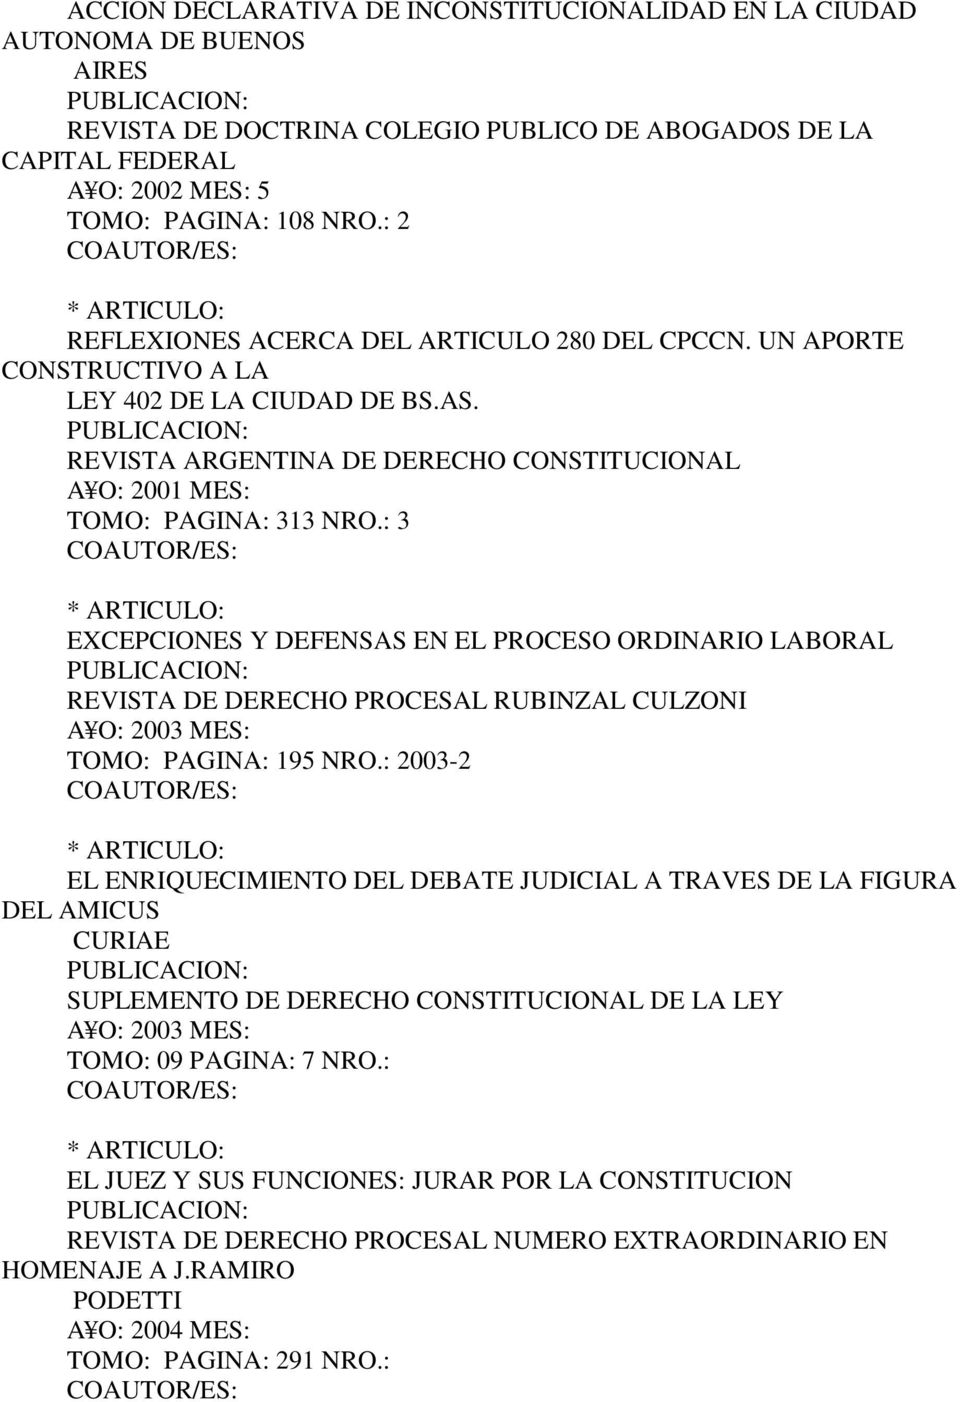 PUBLICACION: REVISTA ARGENTINA DE DERECHO CONSTITUCIONAL A O: 2001 MES: TOMO: PAGINA: 313 NRO.